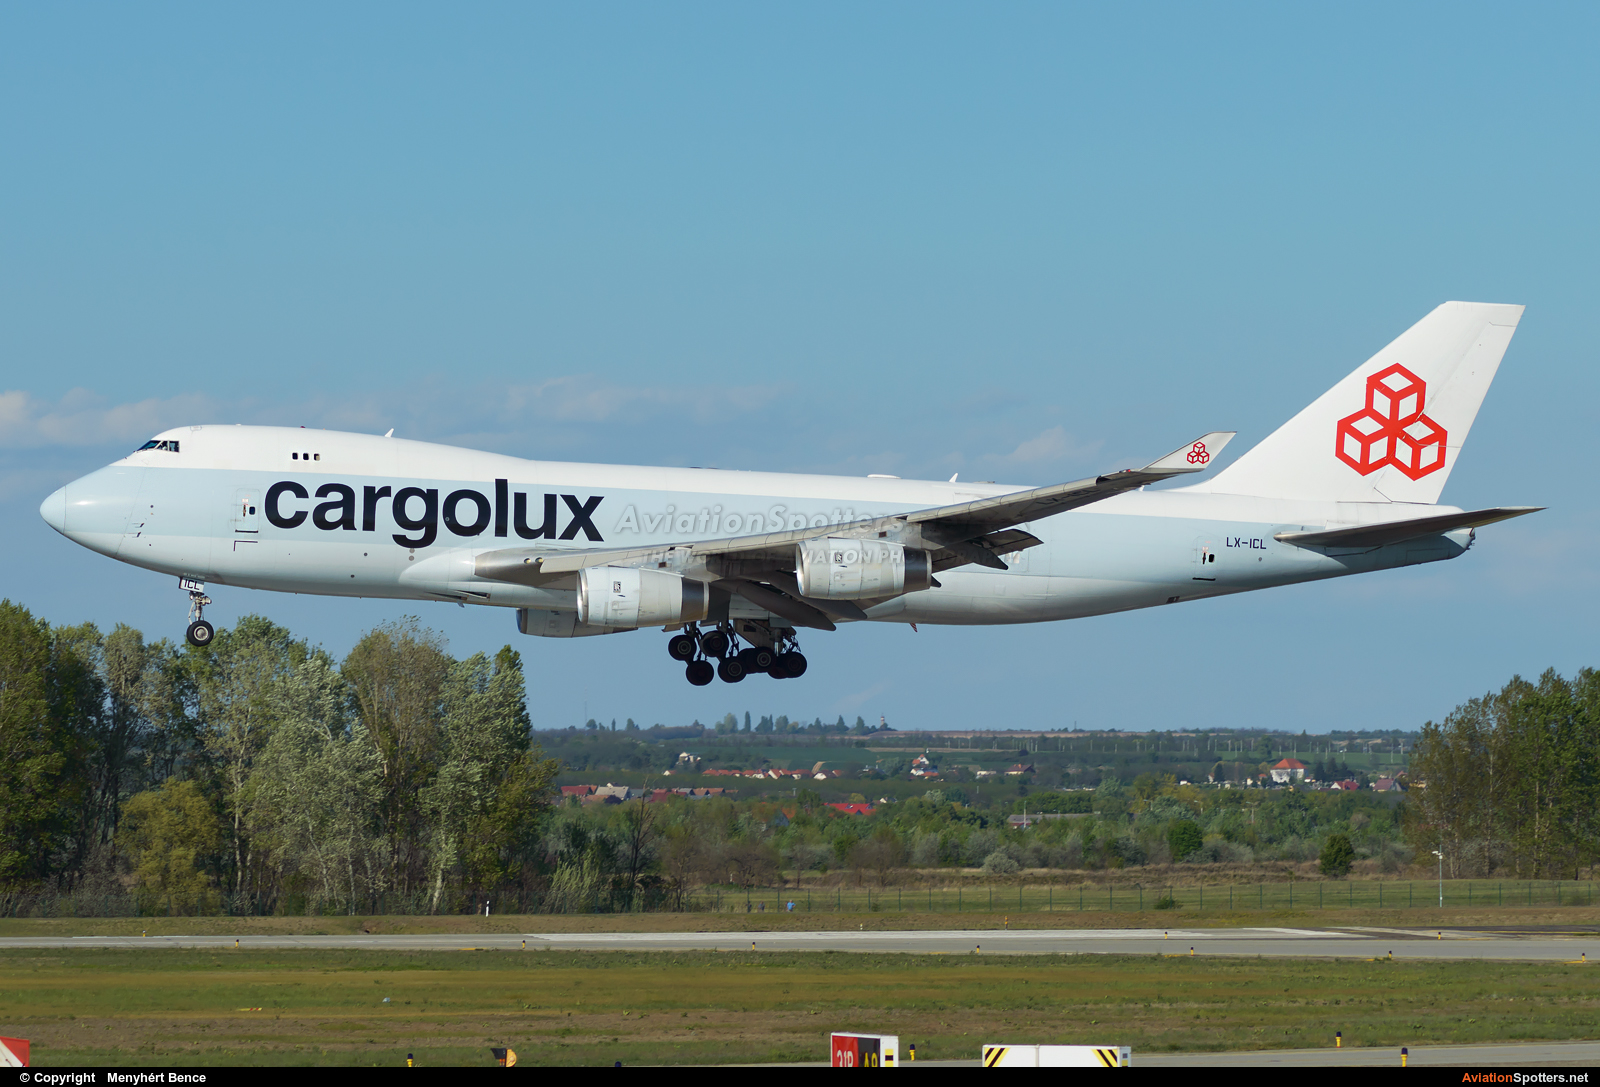 Cargolux  -  747-400F  (LX-ICL) By Menyhért Bence (hadesdras91)